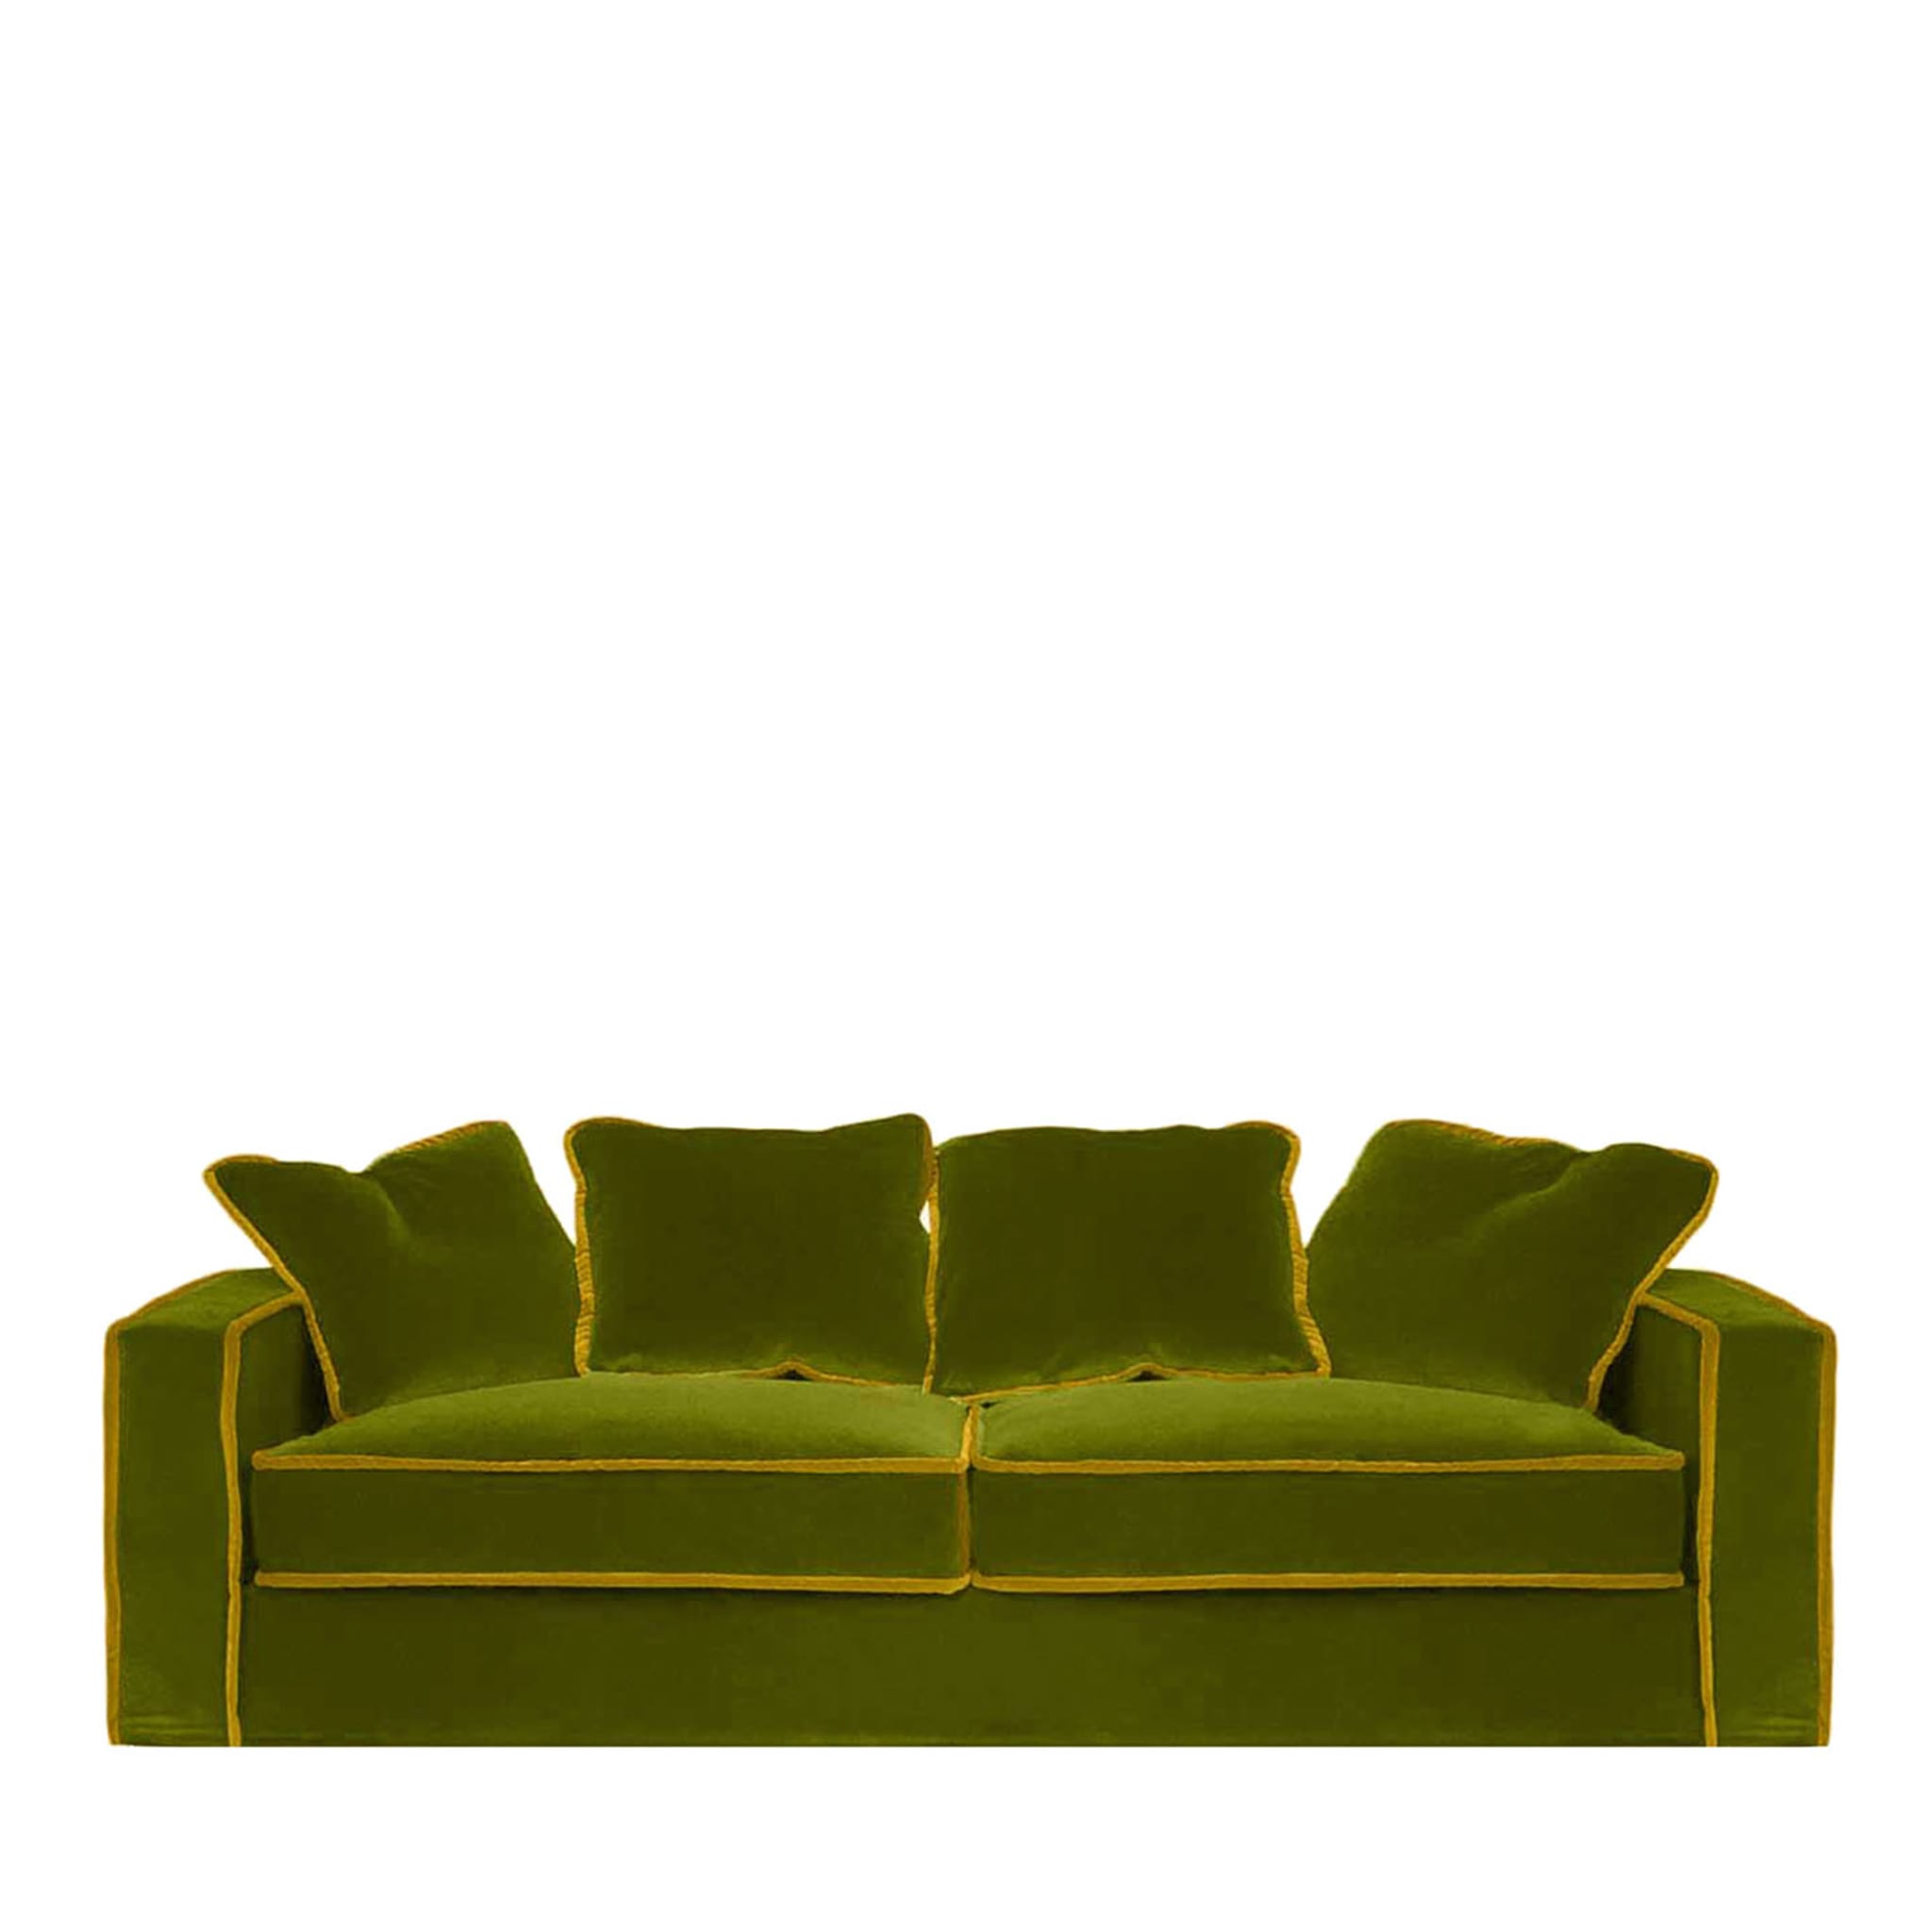 Rafaella Green & Gold Velvet 3 Seater Sofa - Main view